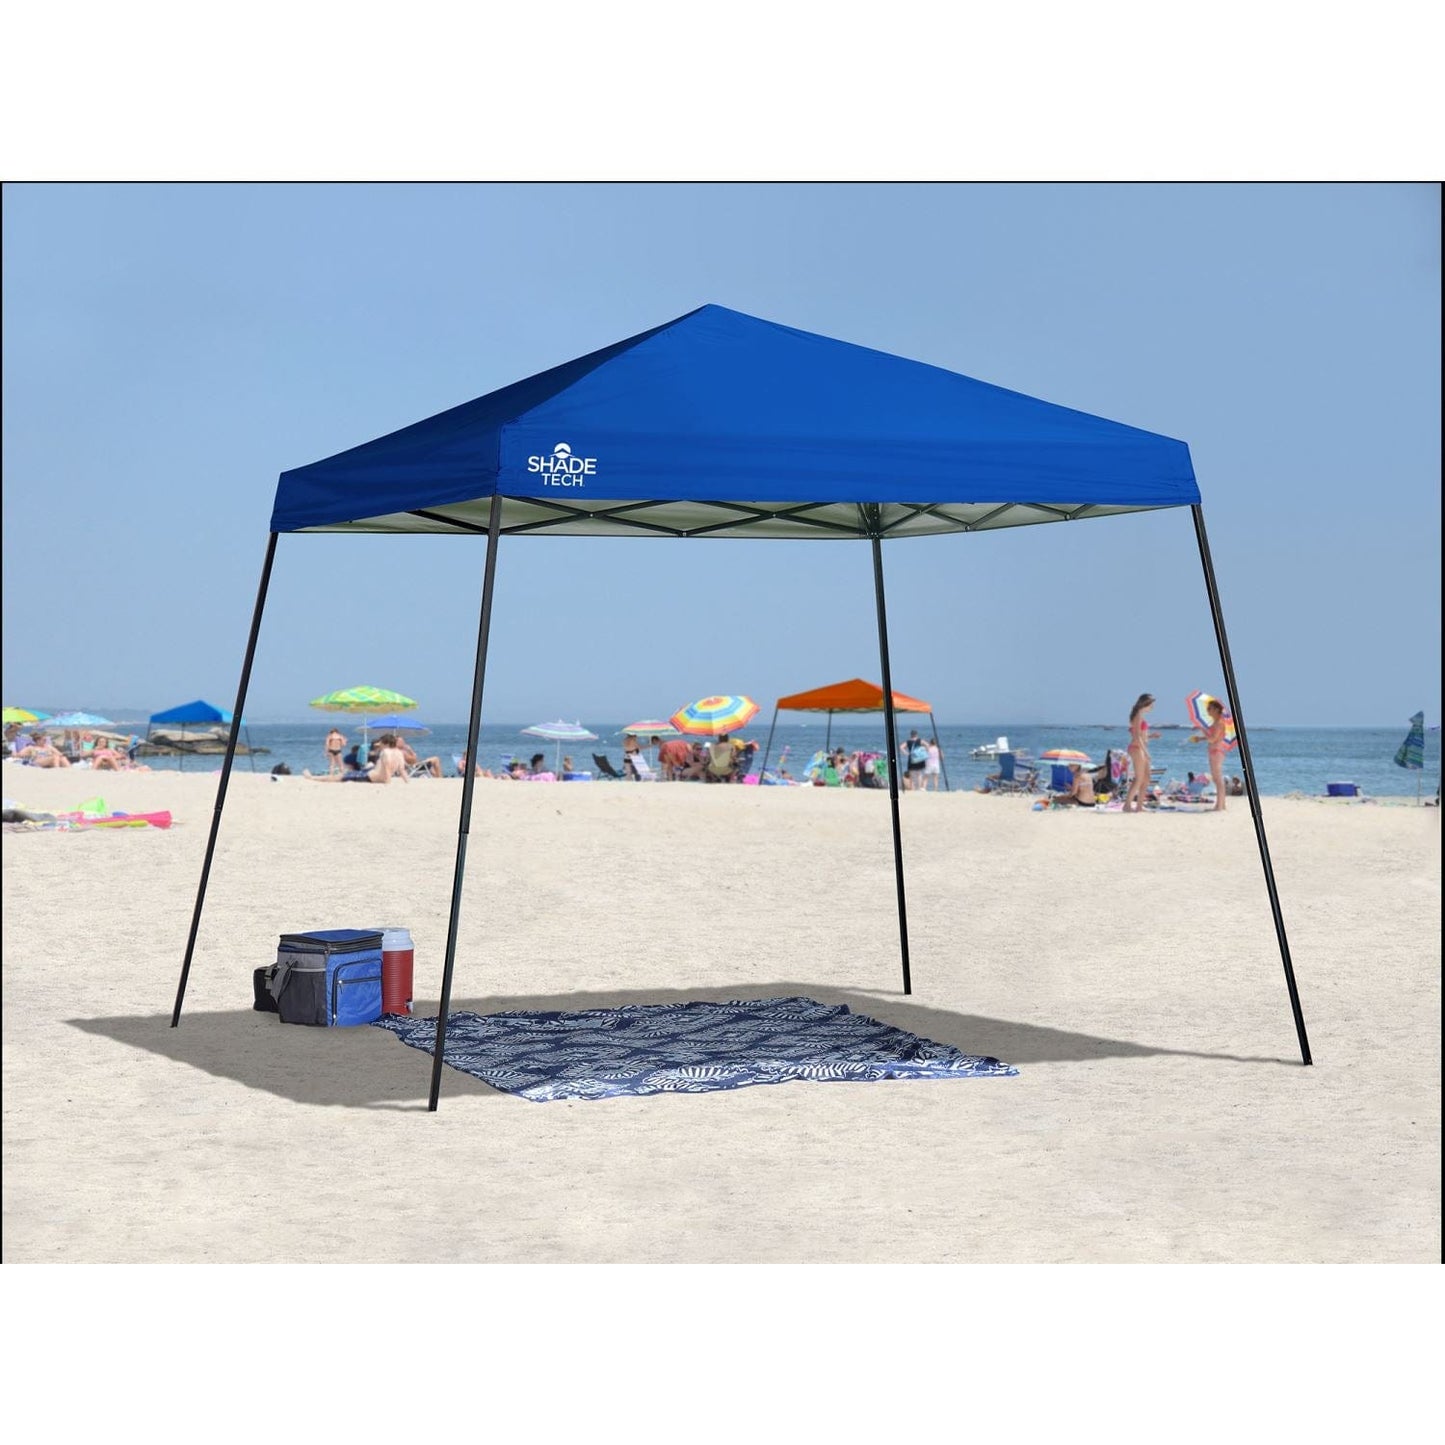 The Fulfiller Pop Up Canopies Quik Shade | Shade Tech ST64 10' X 10' Slant Leg Canopy - Blue 167501DS